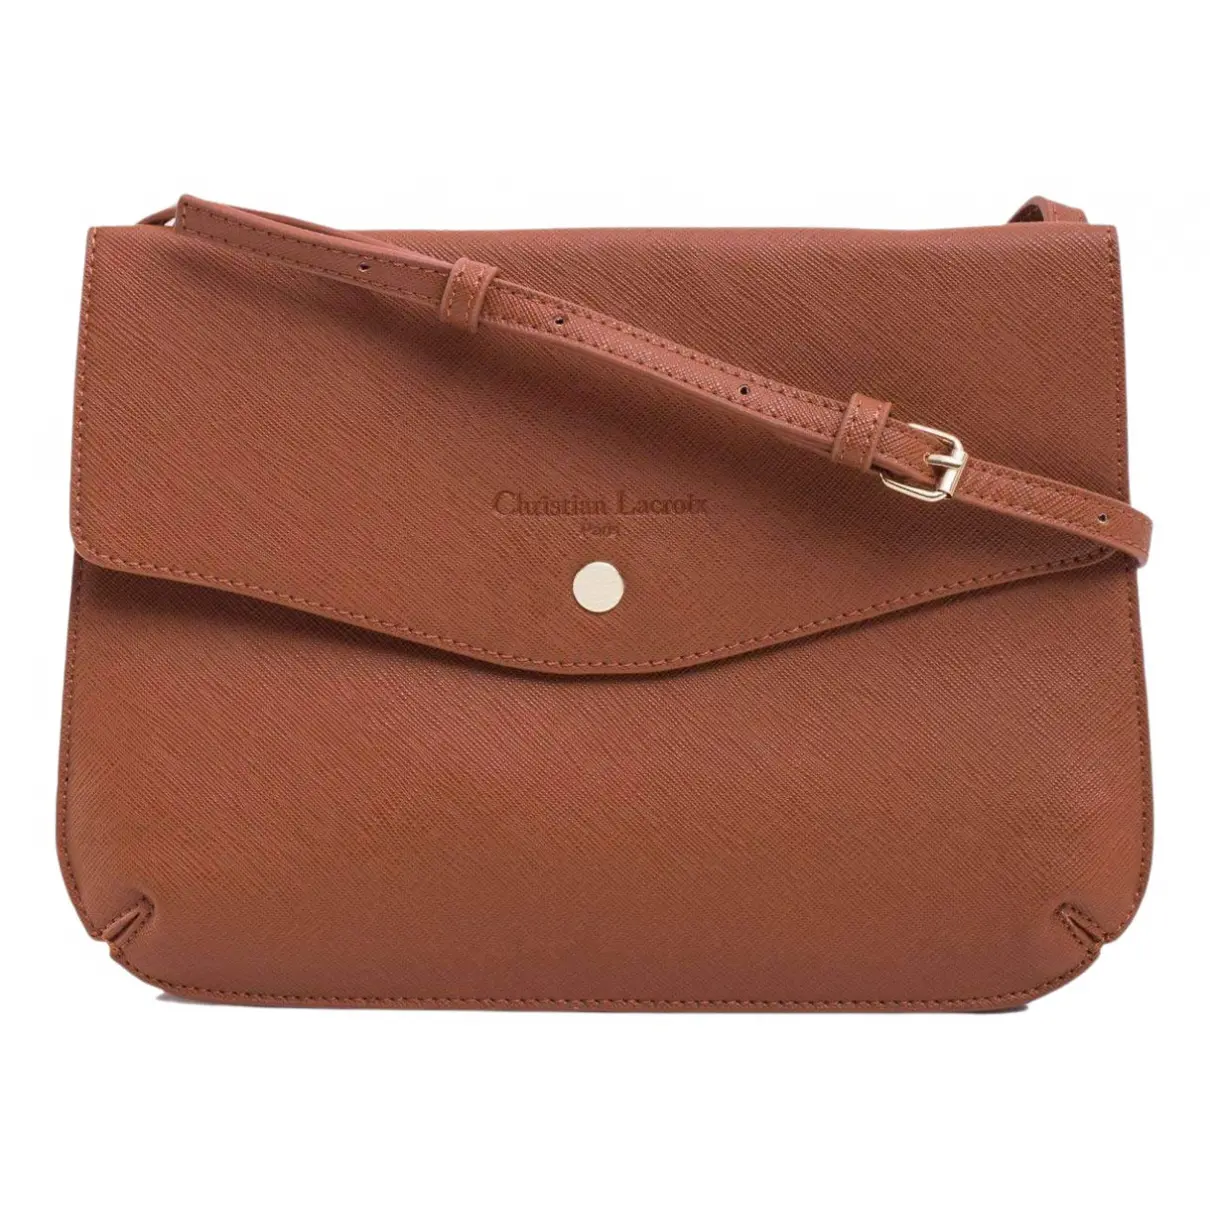 Leather handbag Christian Lacroix